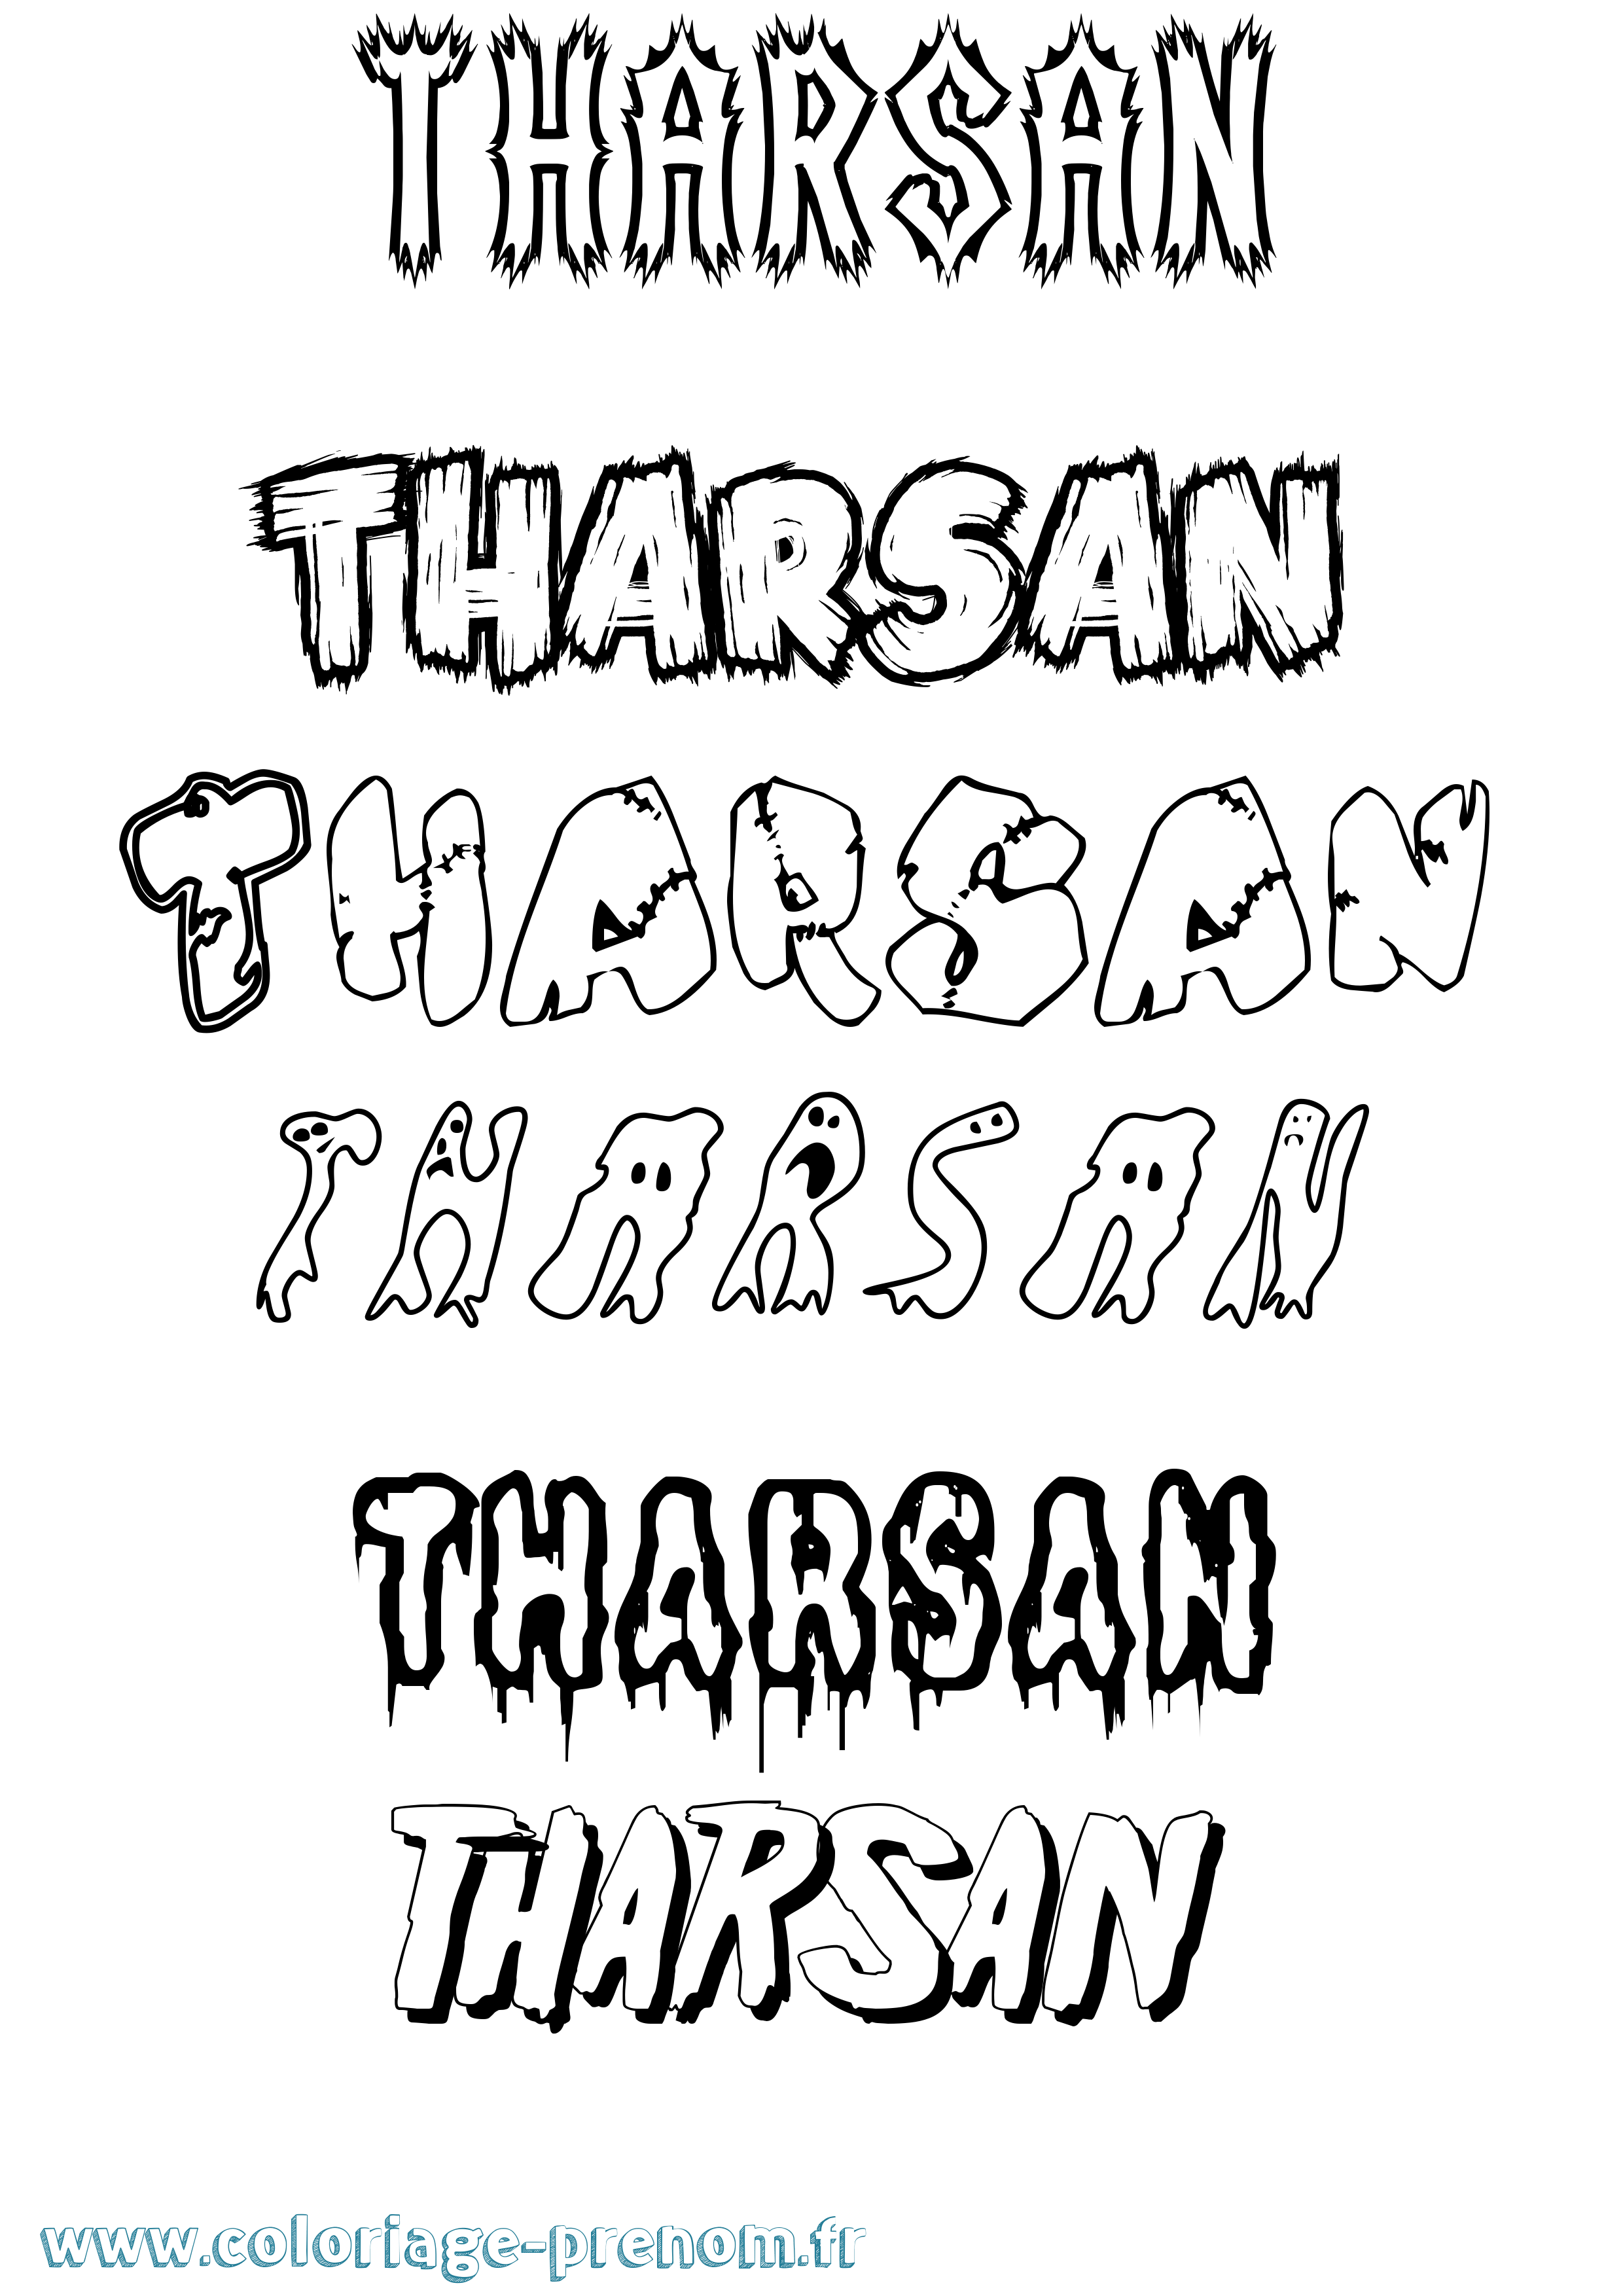 Coloriage prénom Tharsan Frisson